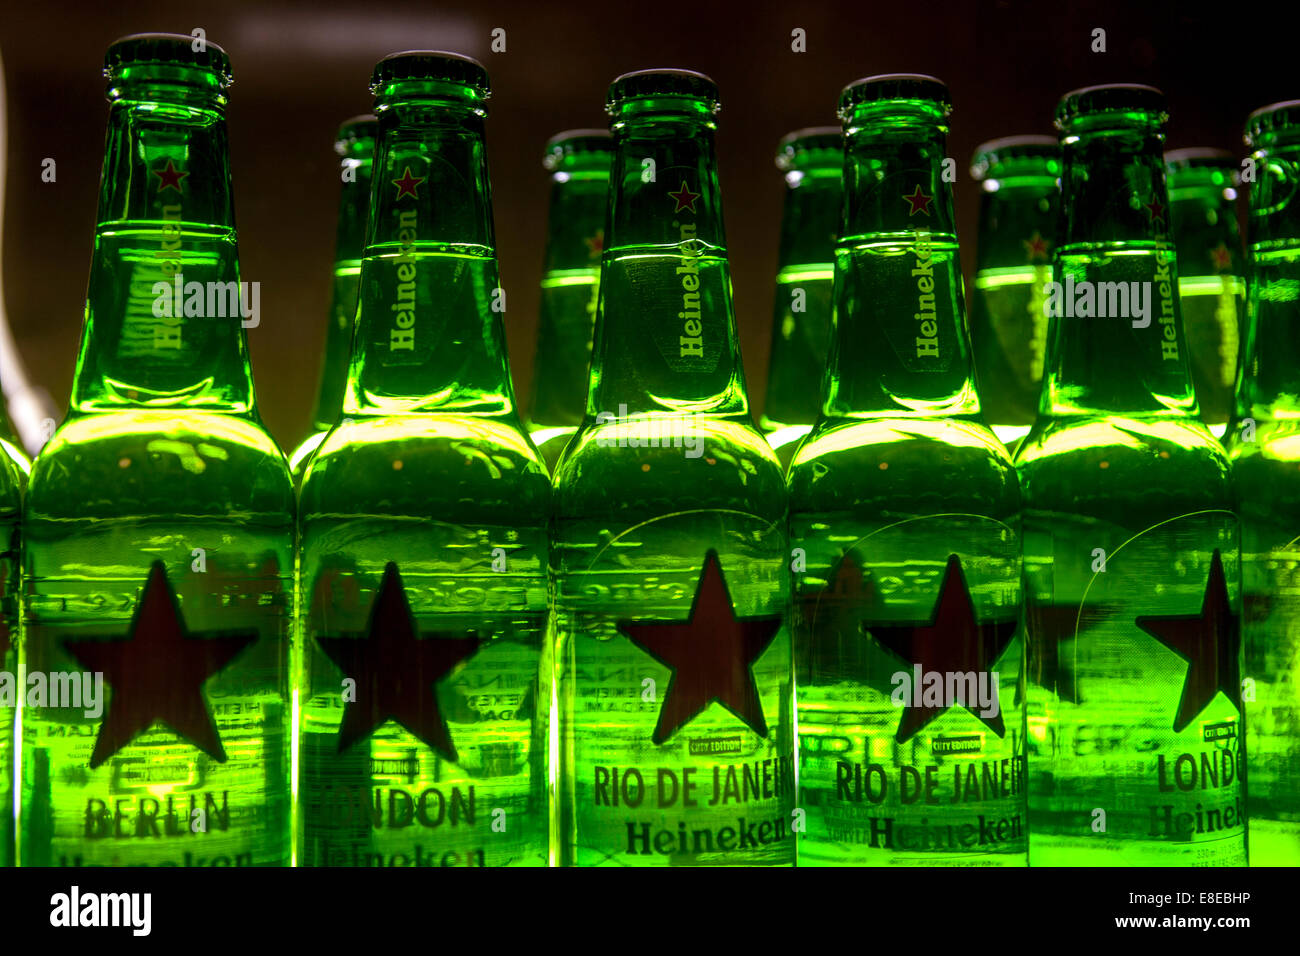 Verde bottiglie di birra Heineken Foto Stock